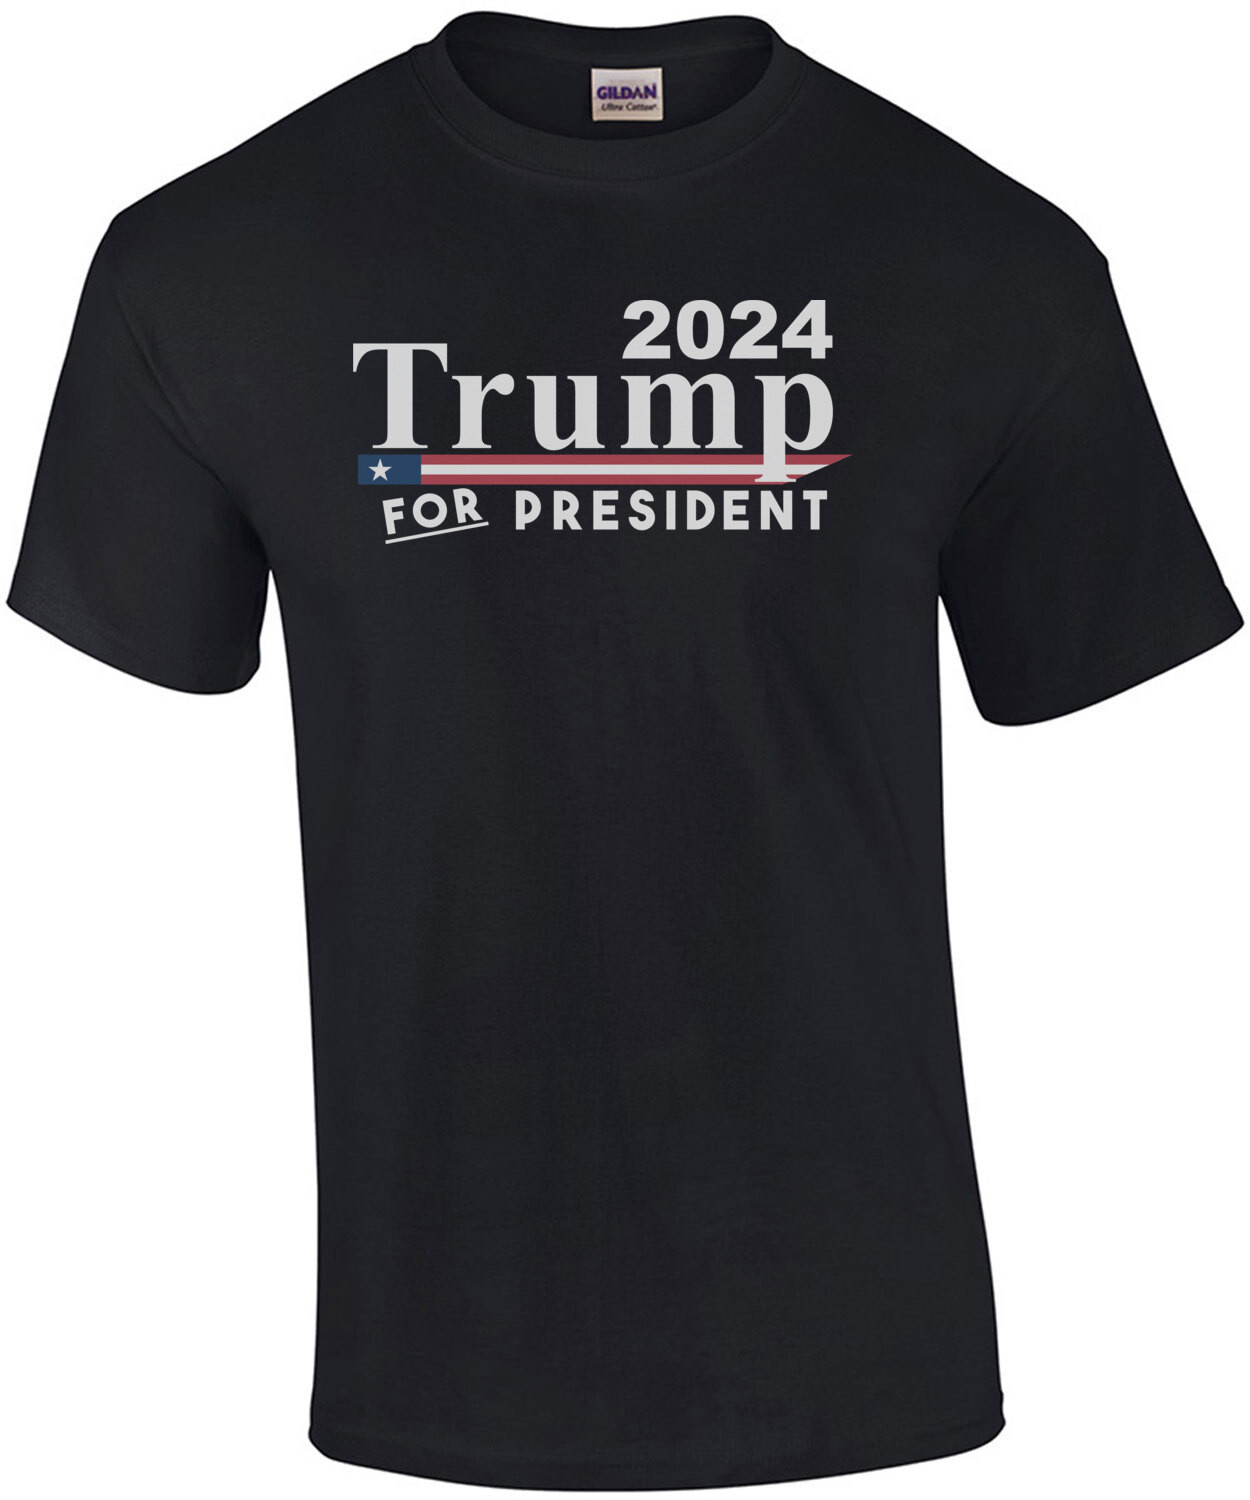 Trump for president 2024 - Donald Trump T-Shirt